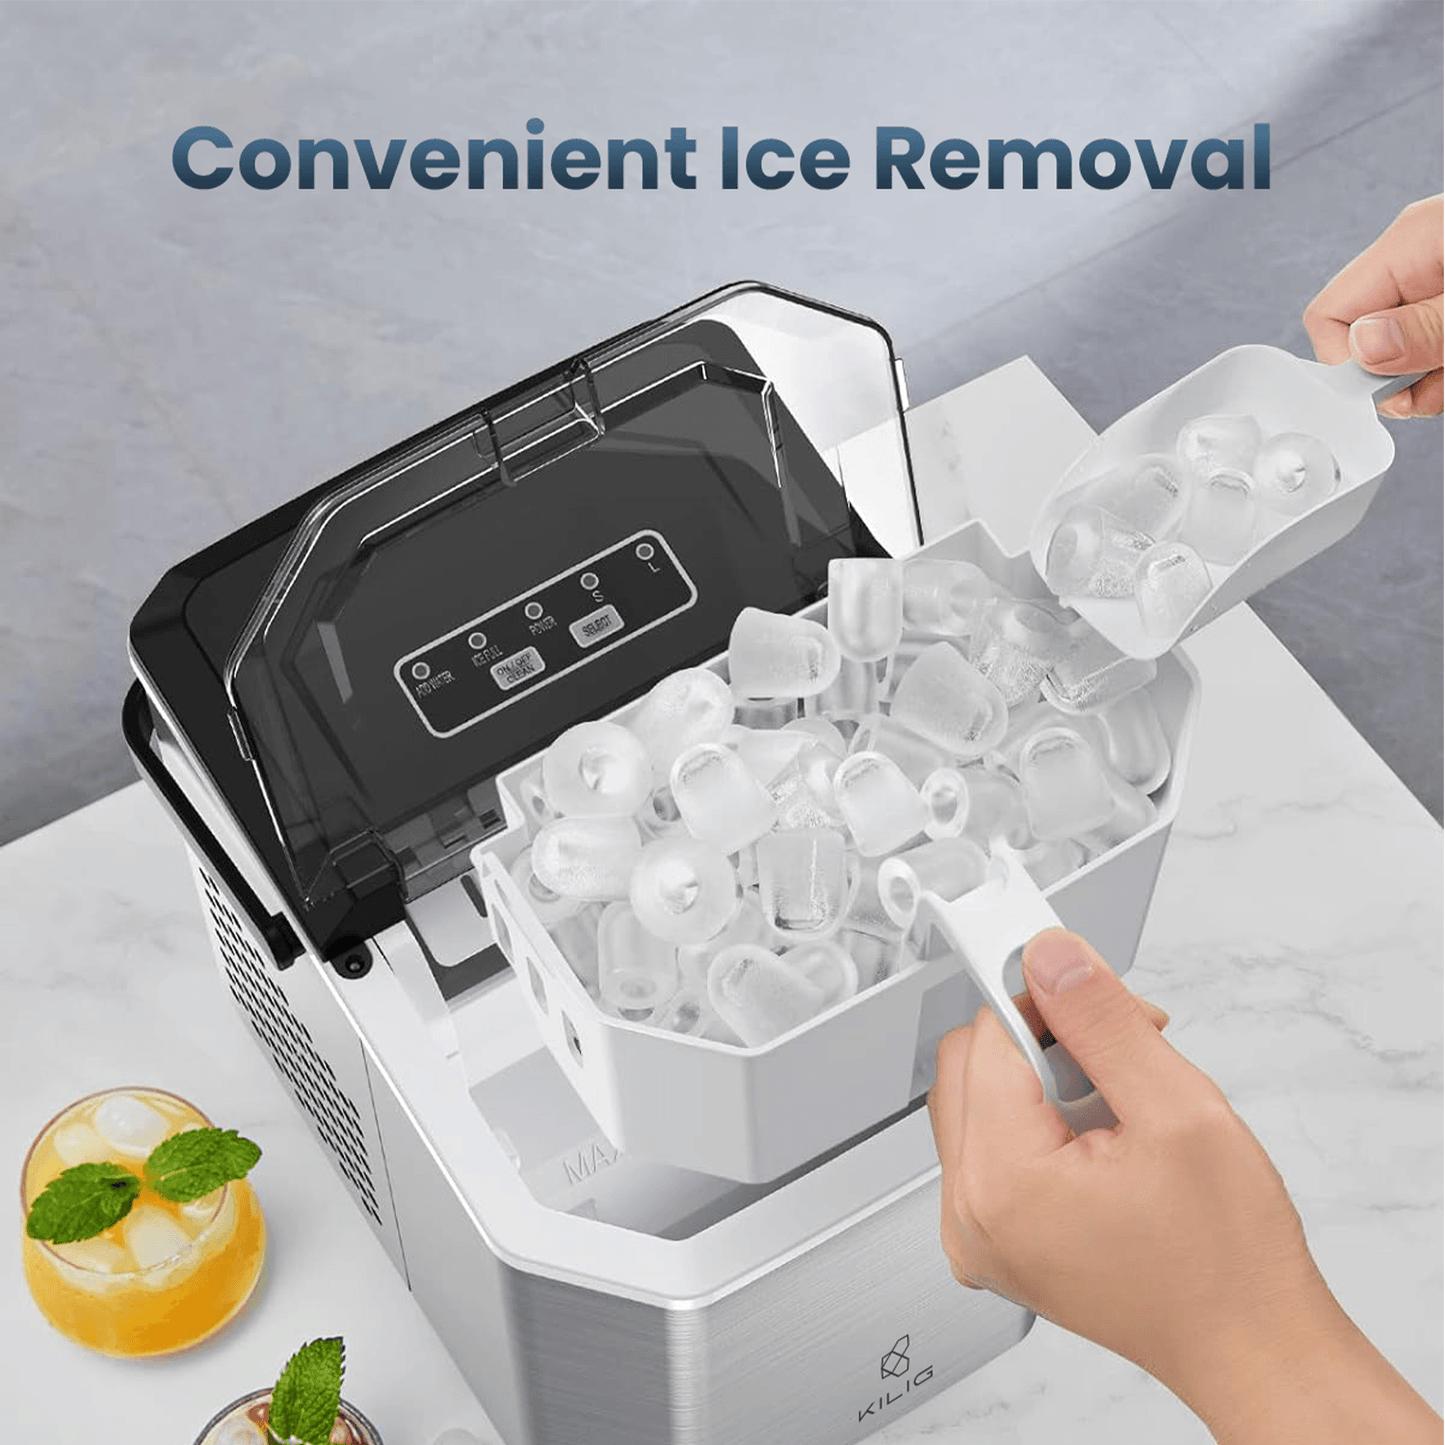 Kilig G01 Countertop ice maker machine - Happyware Home Pvt Ltd